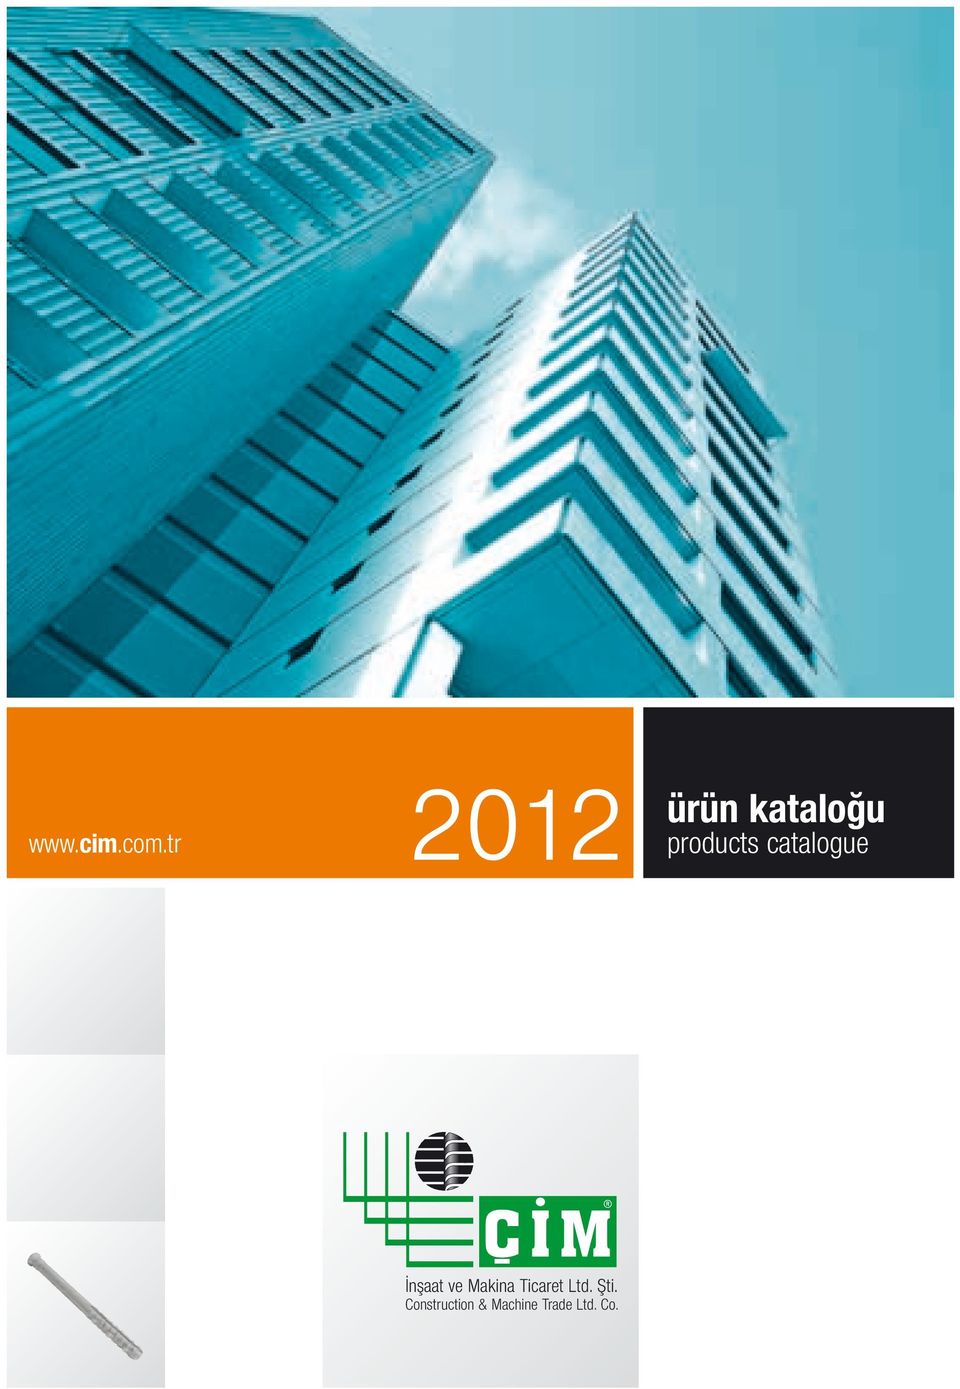 tr 2012 ürün kataloğu products catalogue